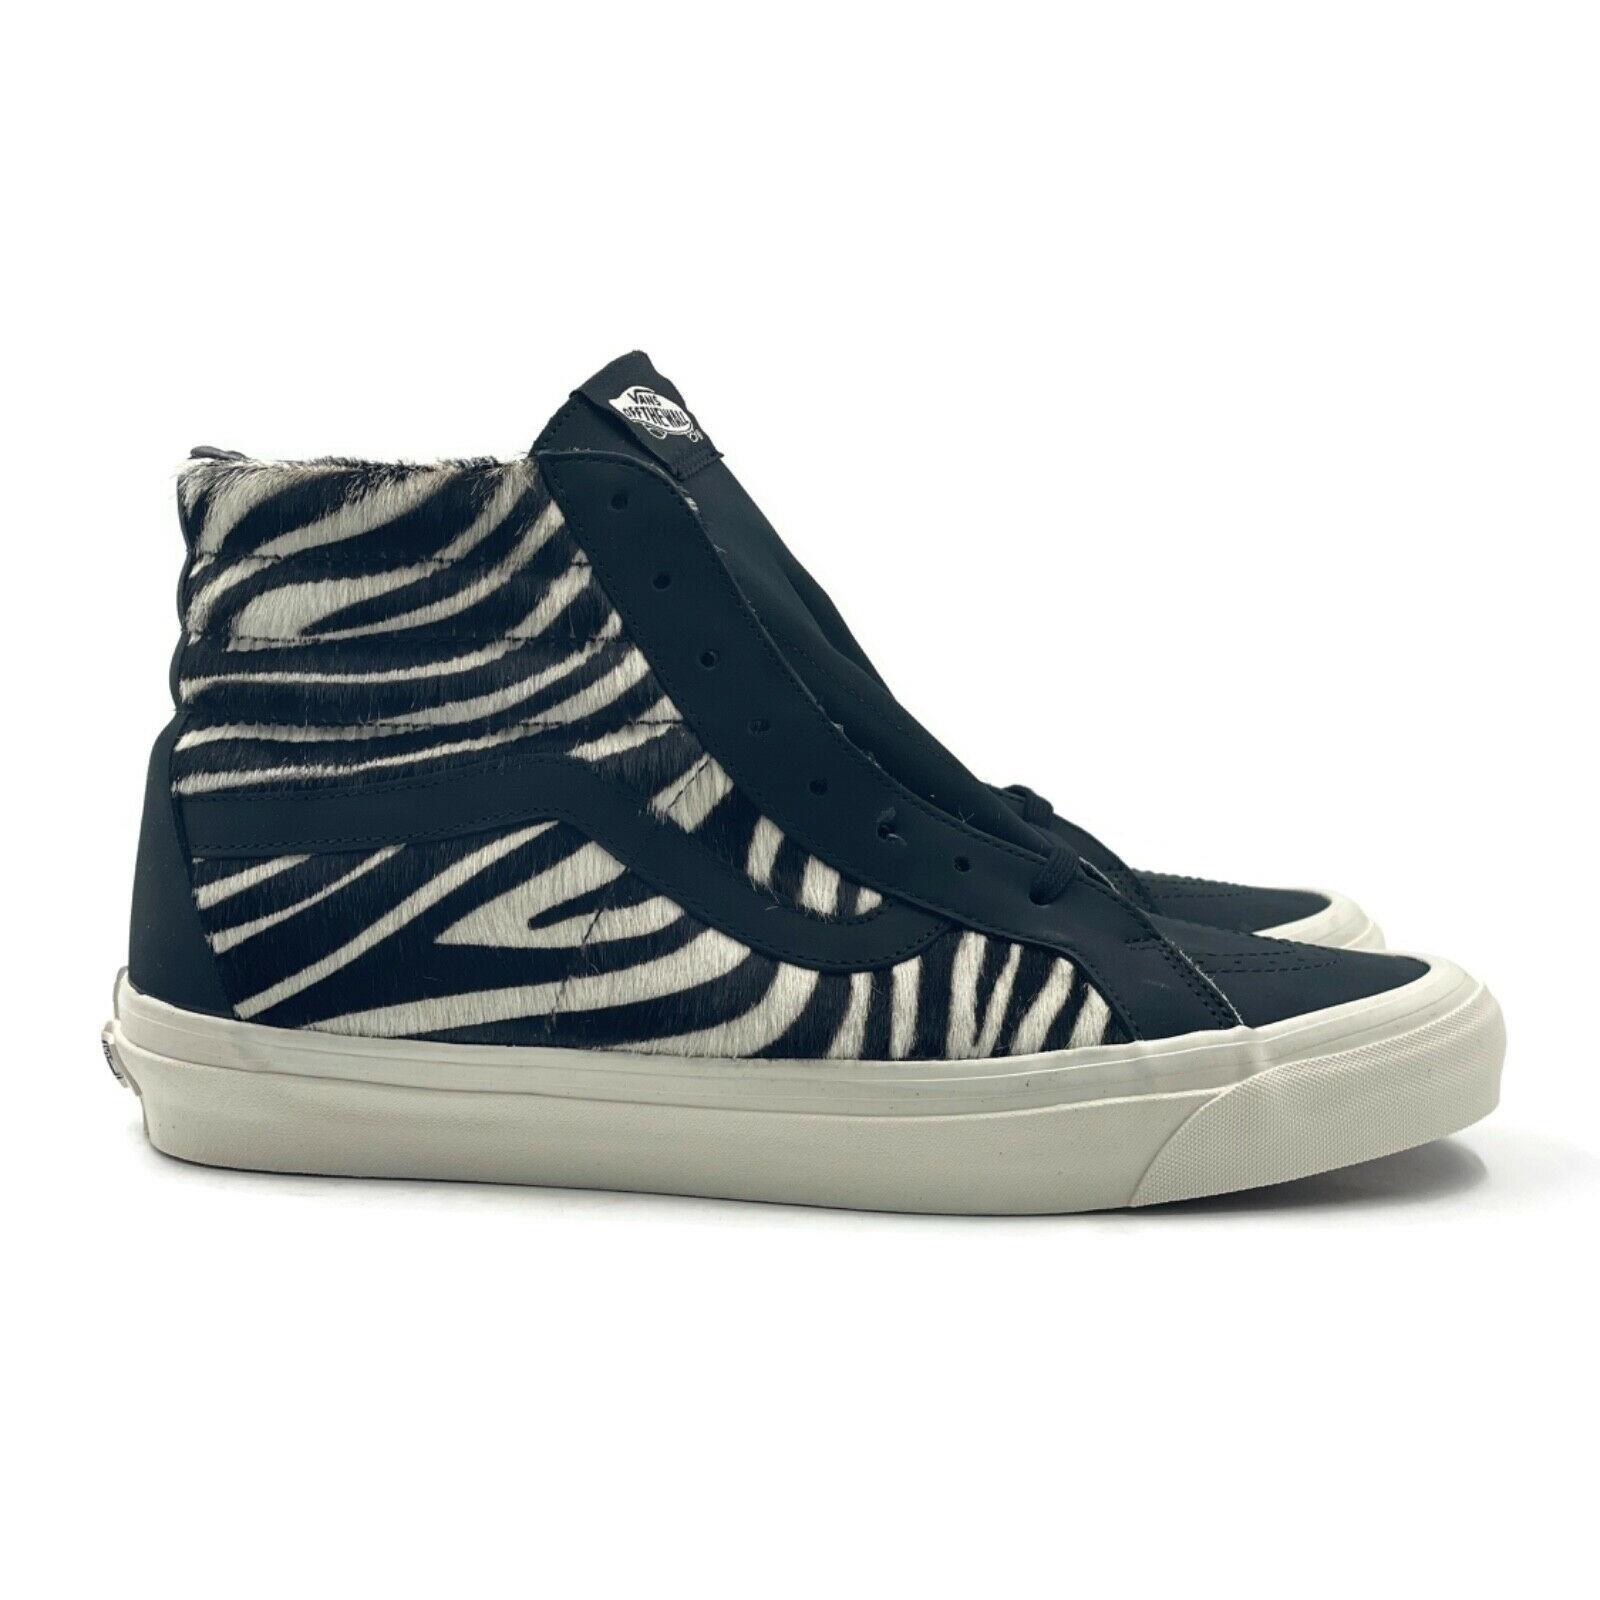 Vans Sk8 Hi 38 DX Mens Size 9 Premium Skate Shoe Black Zebra Trainer Sneaker